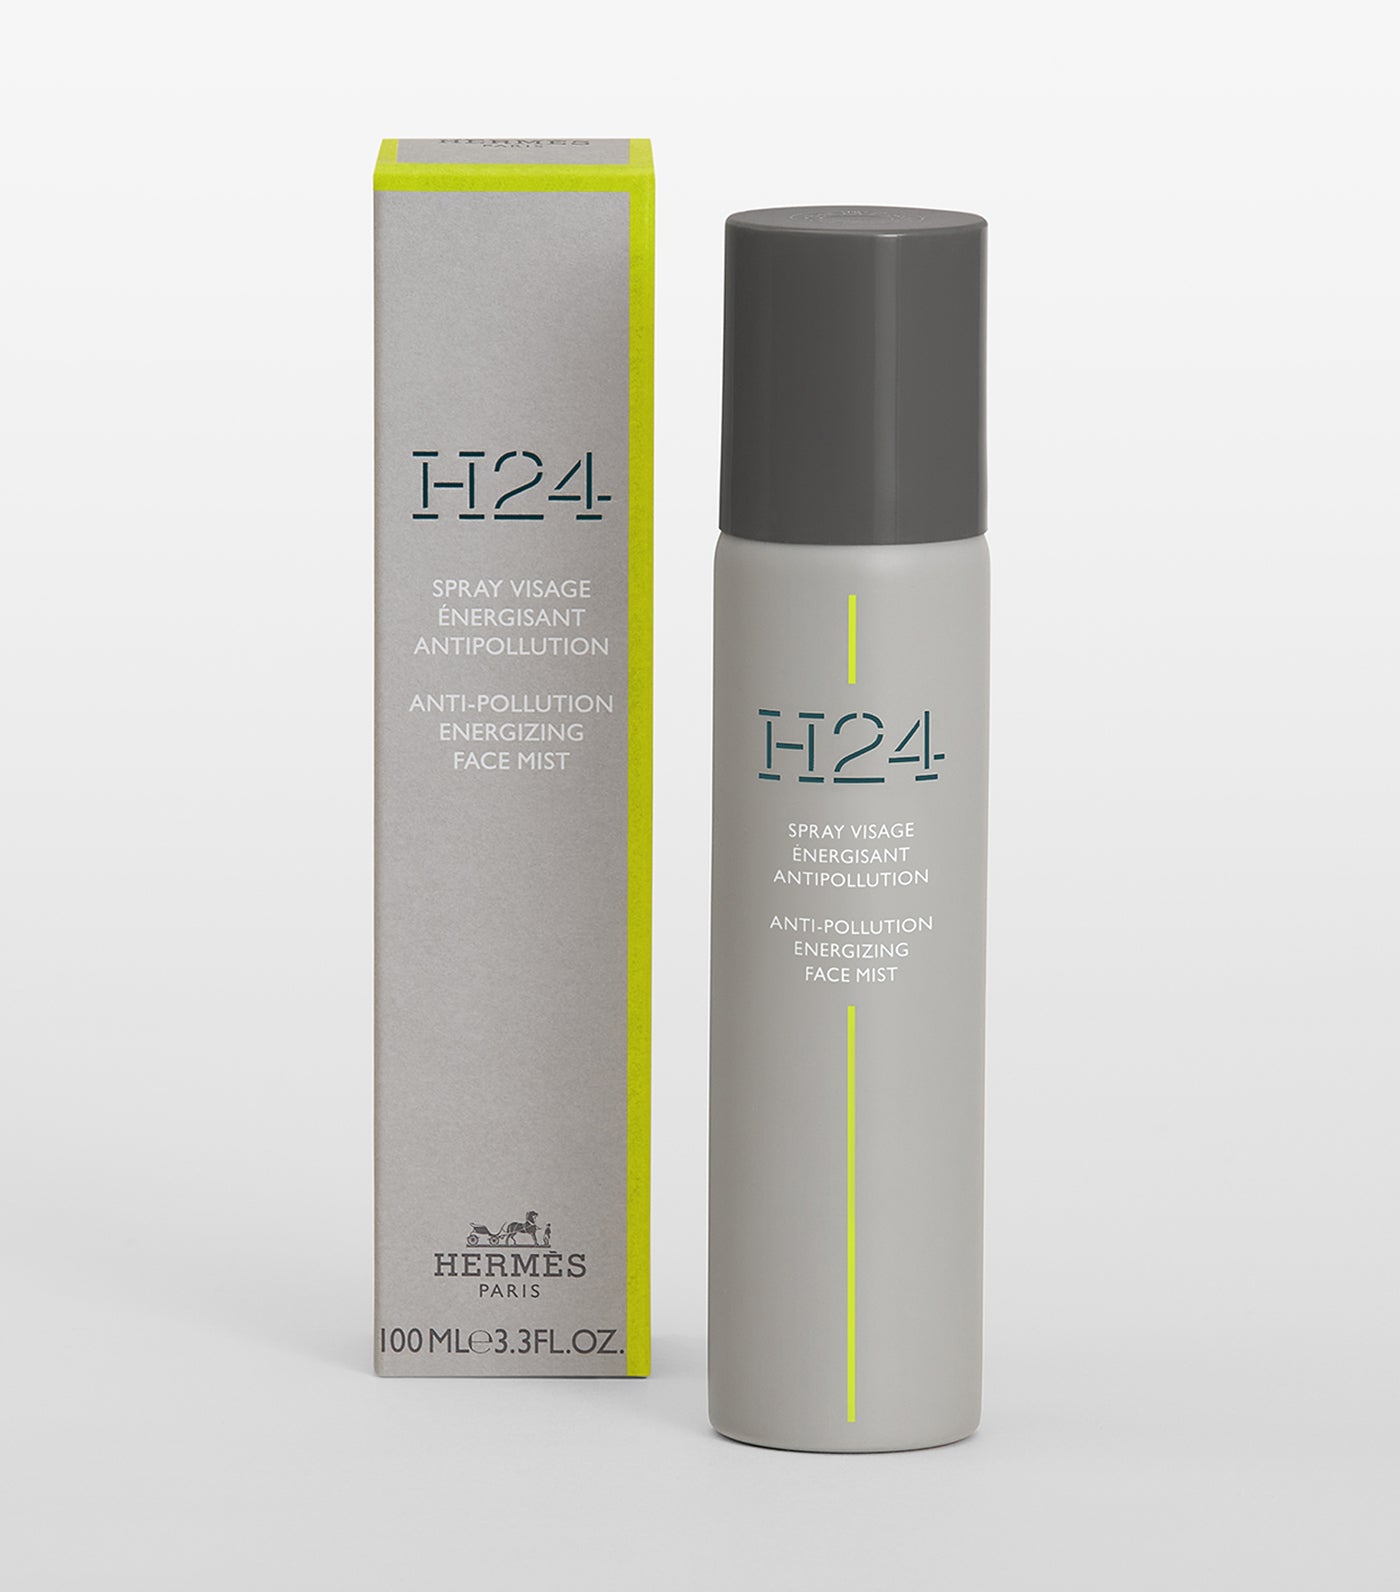 H24, energizing anti-pollution face spray 100ml